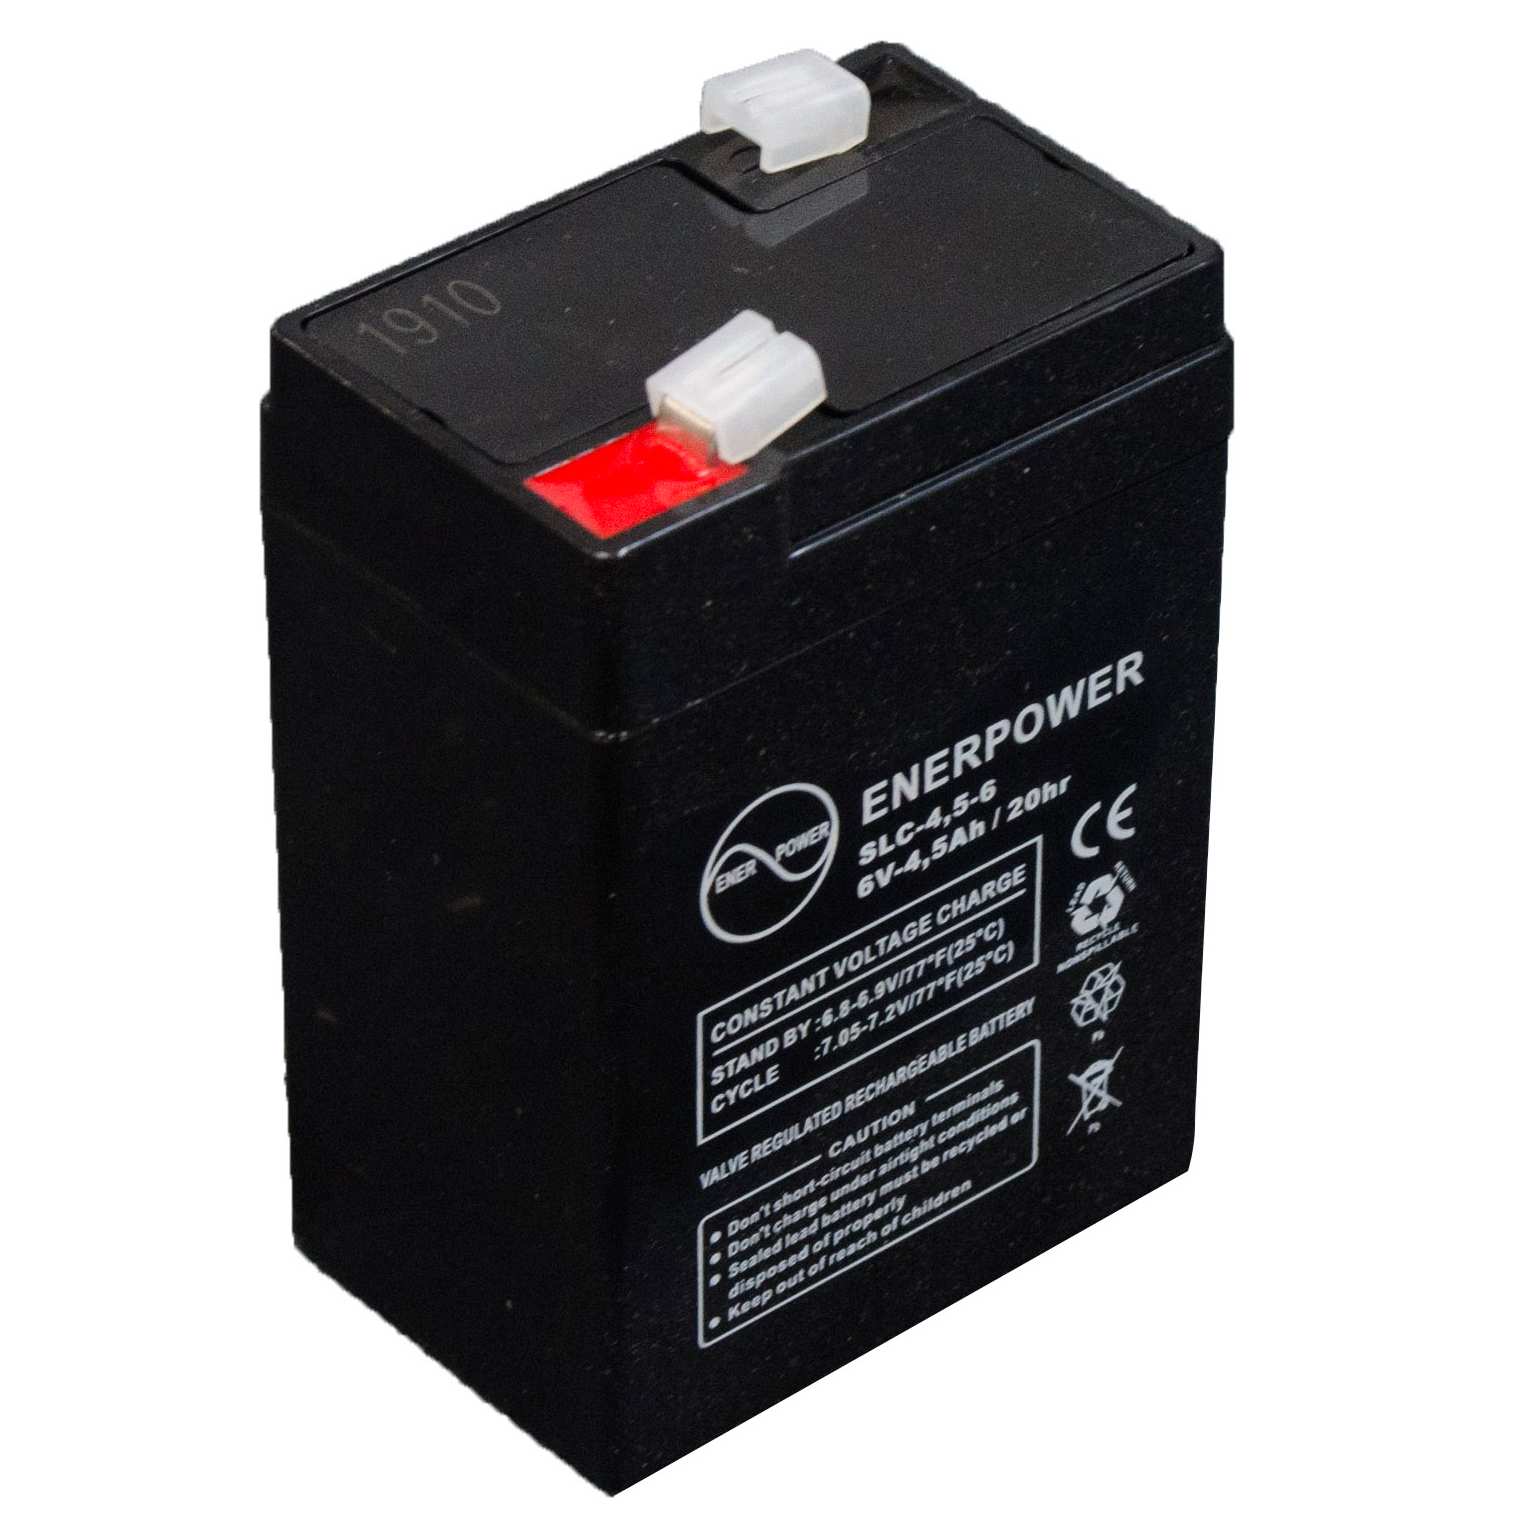 SLC4.5-6 AGM ENERPOWER battery